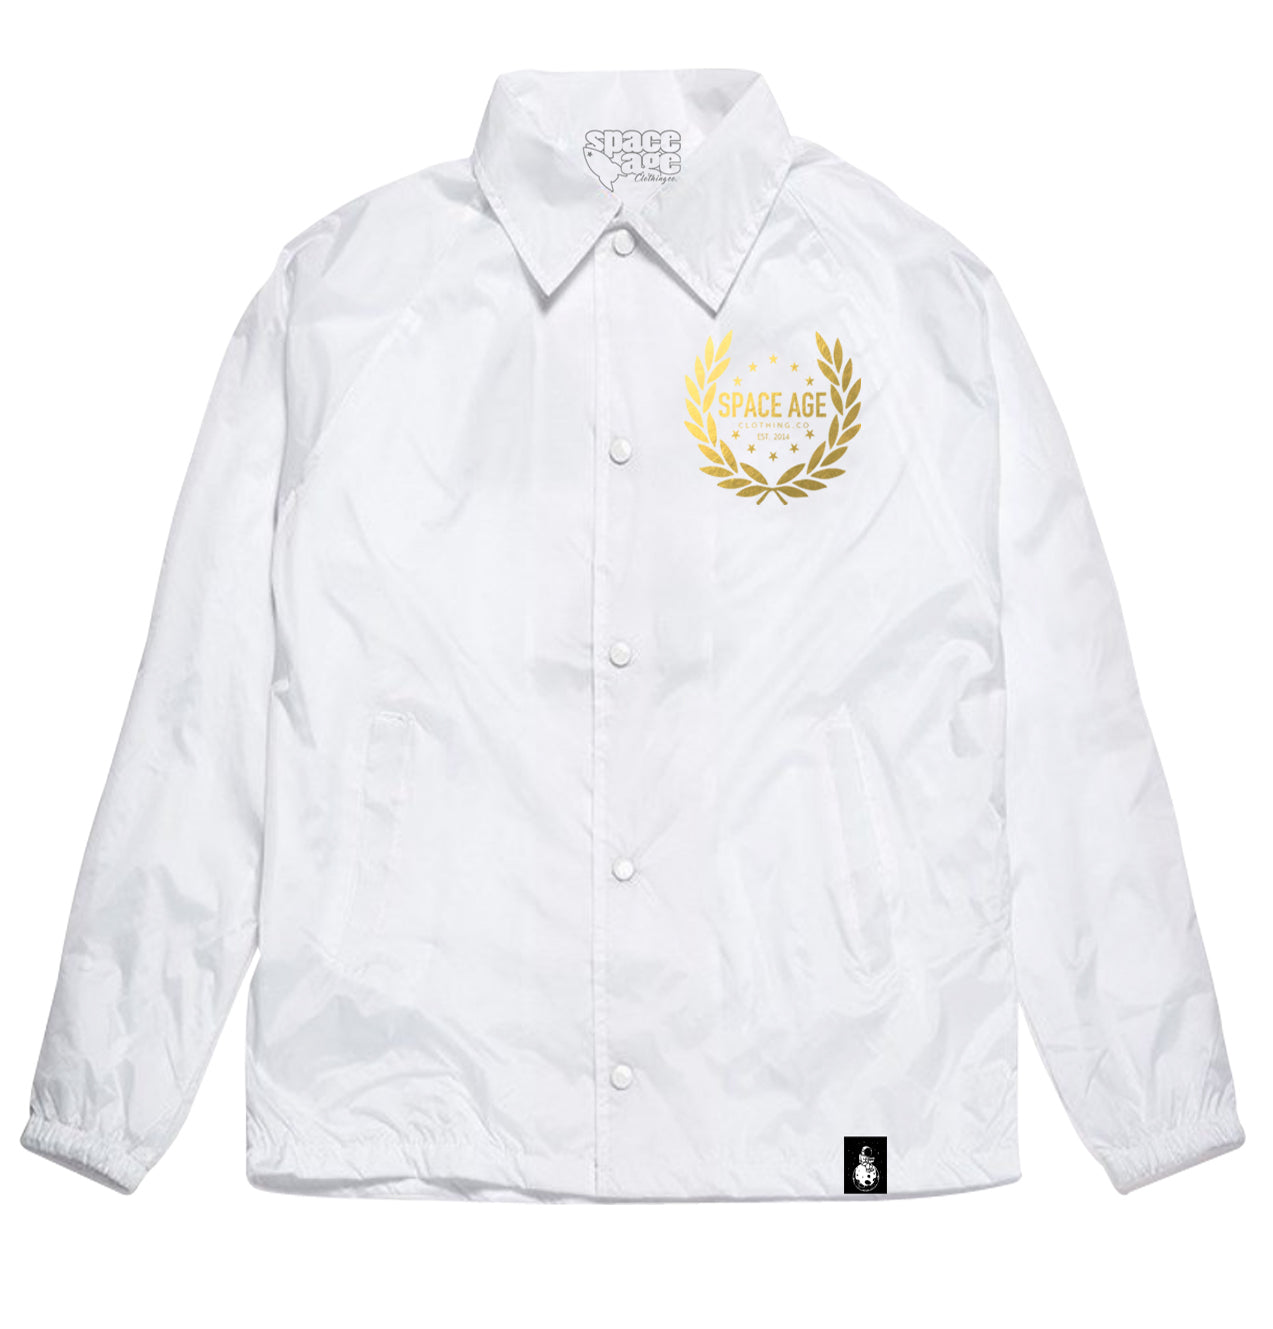 Gold Flowers on White Coaches Jacket